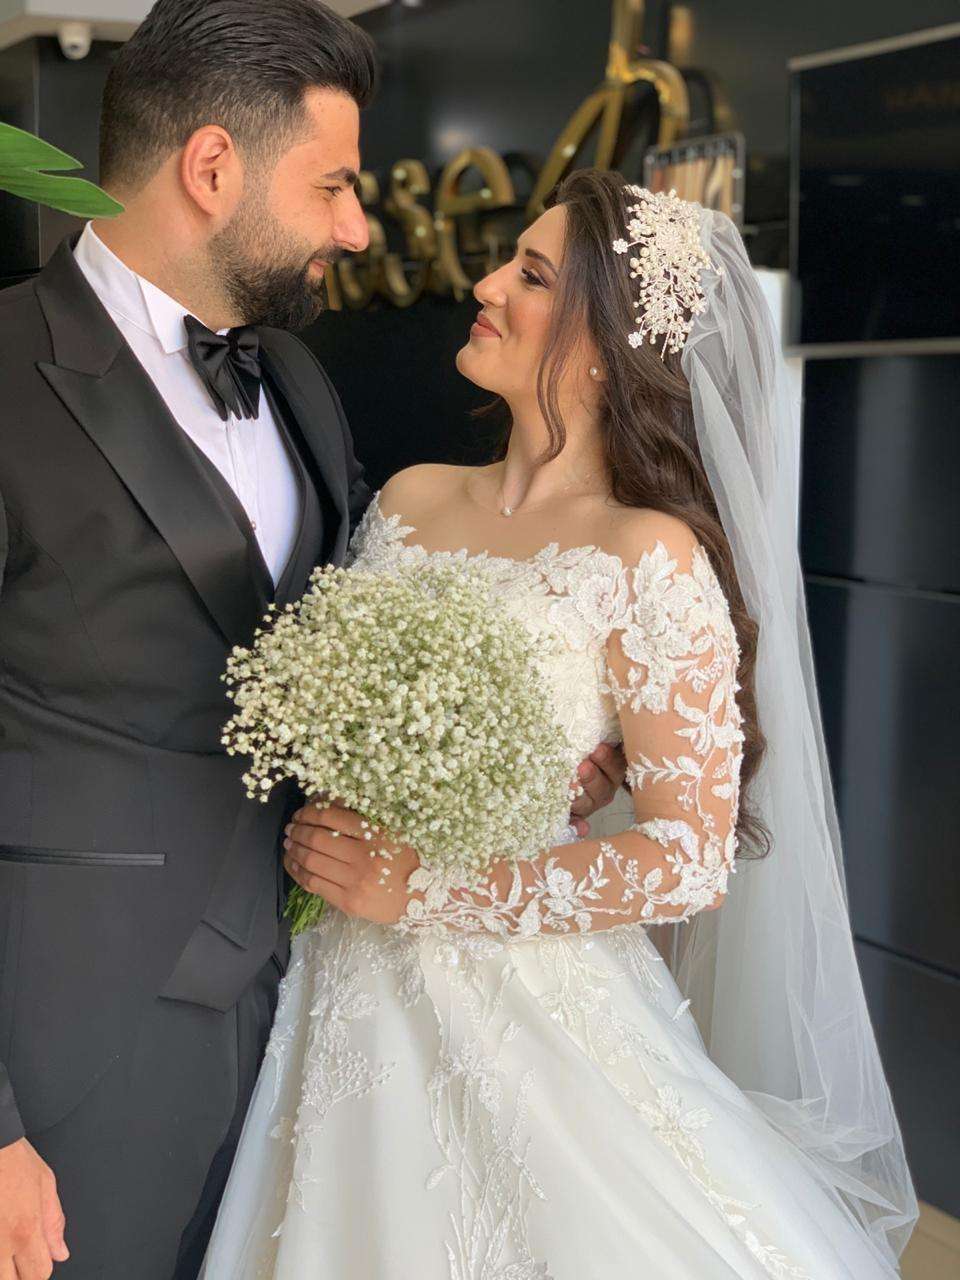 Ahmad and Iman&#039;s Wedding in Lebanon